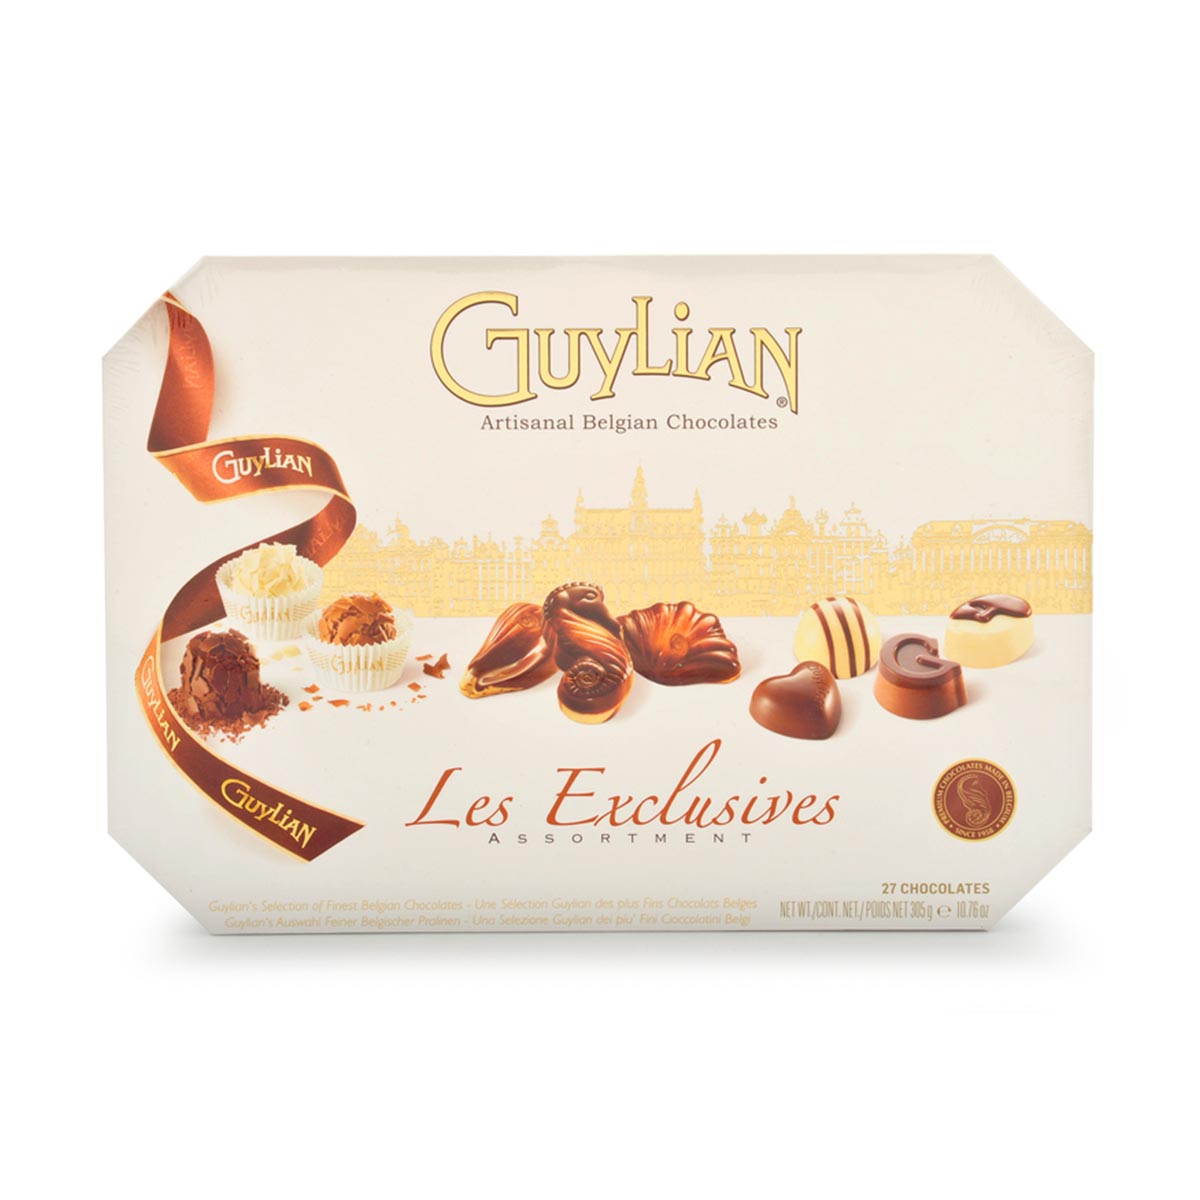 Artisanal Belgian Chocolates - Guylian